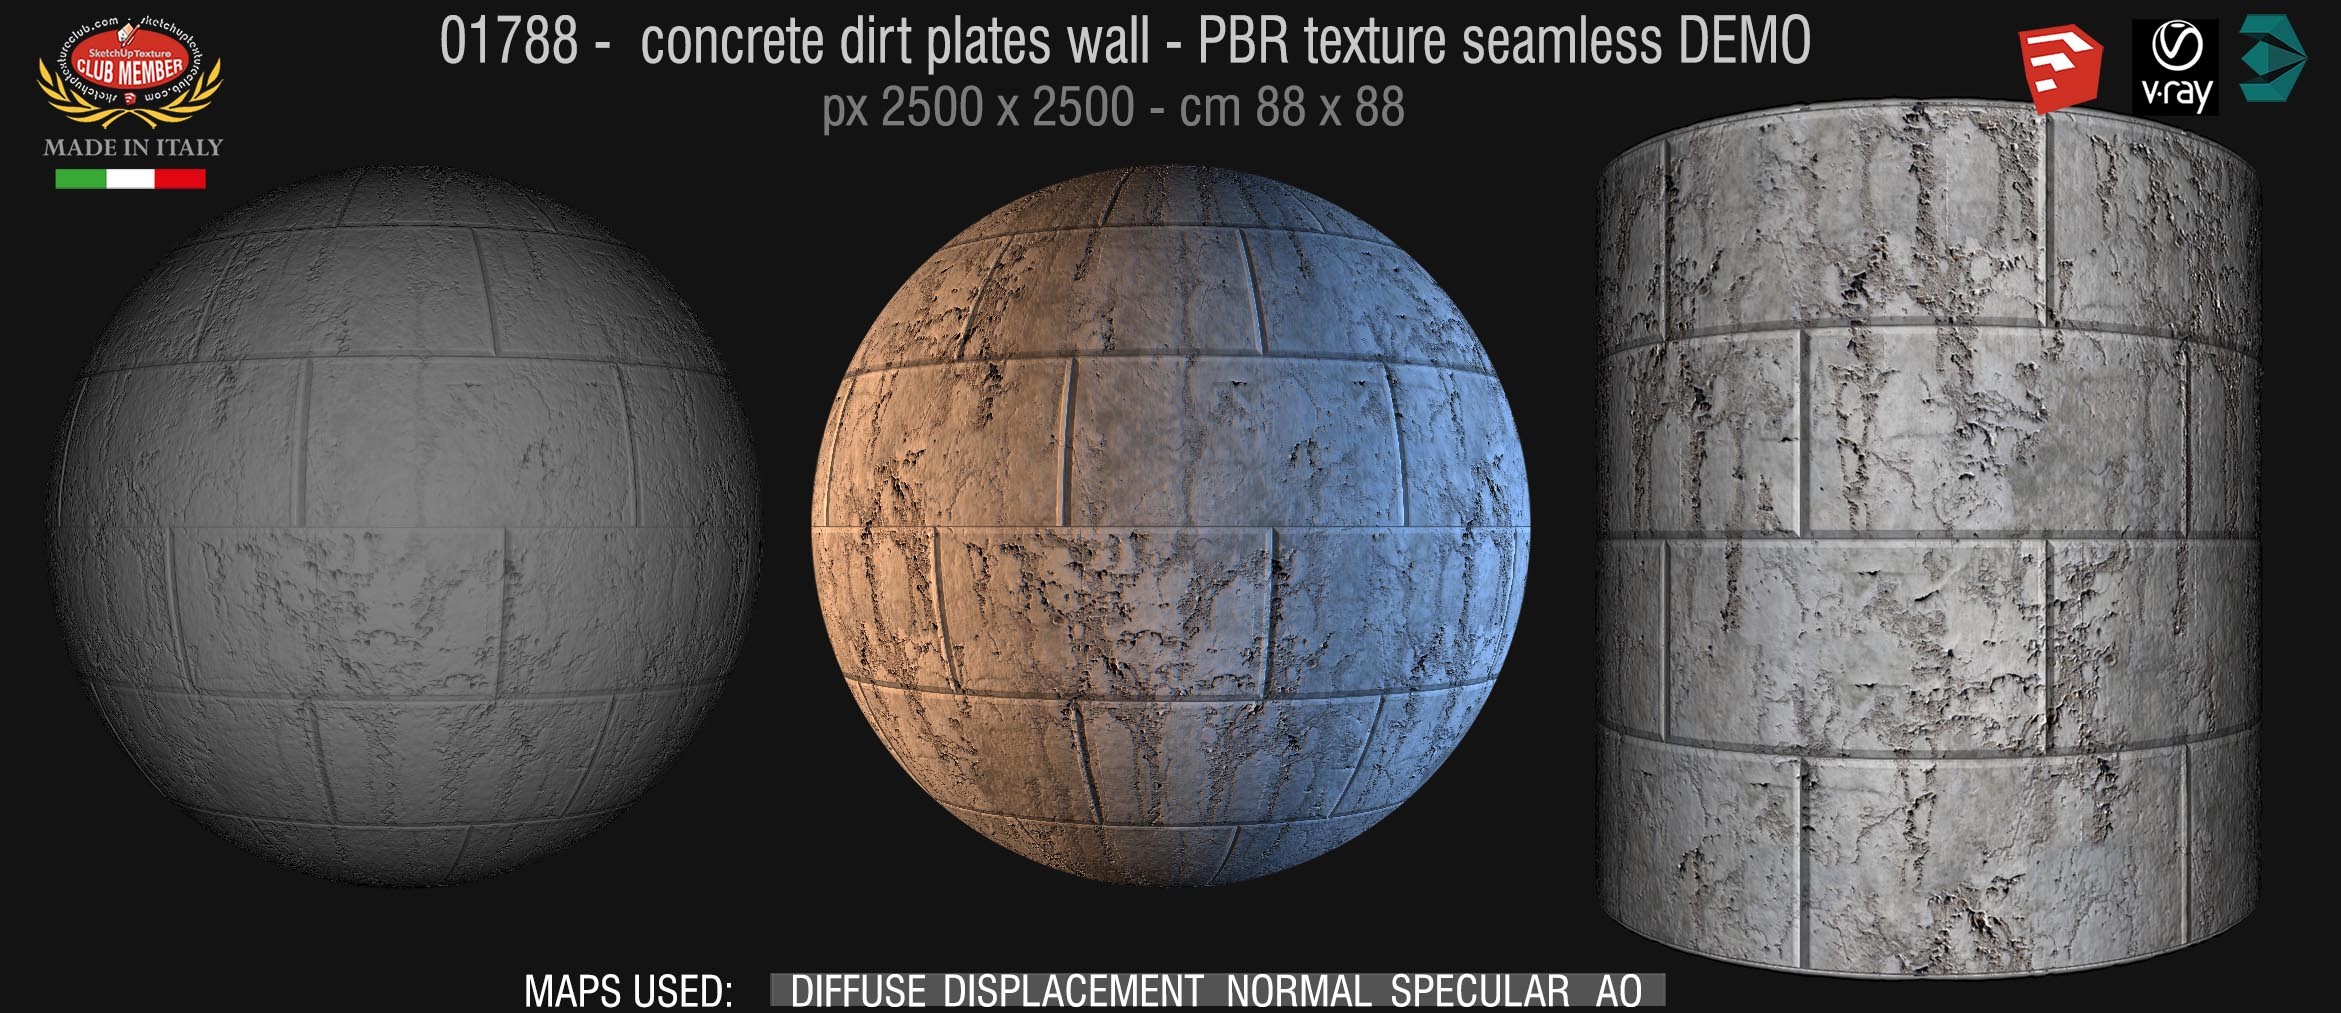 01788 concrete dirt plates wall PBR texture seamless DEMO